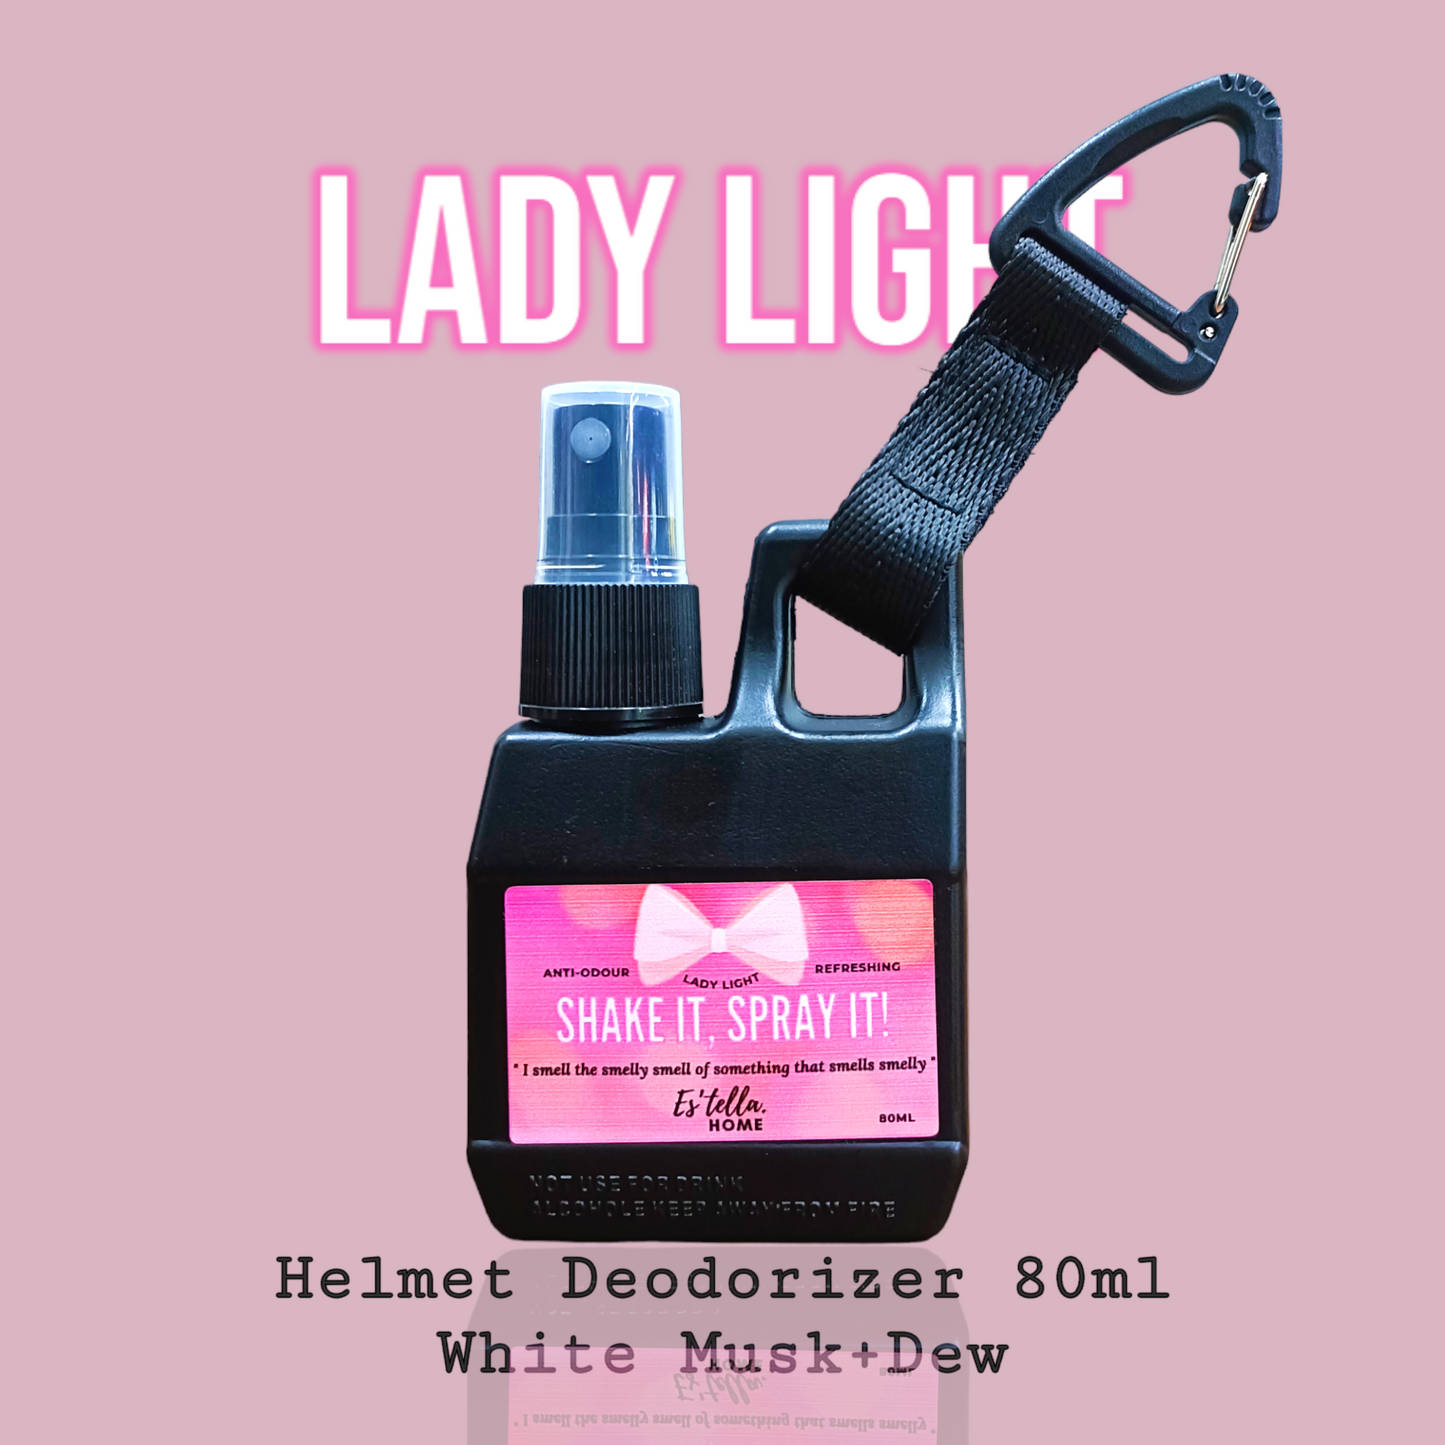 Helmet Deodorizer (Lady Light)